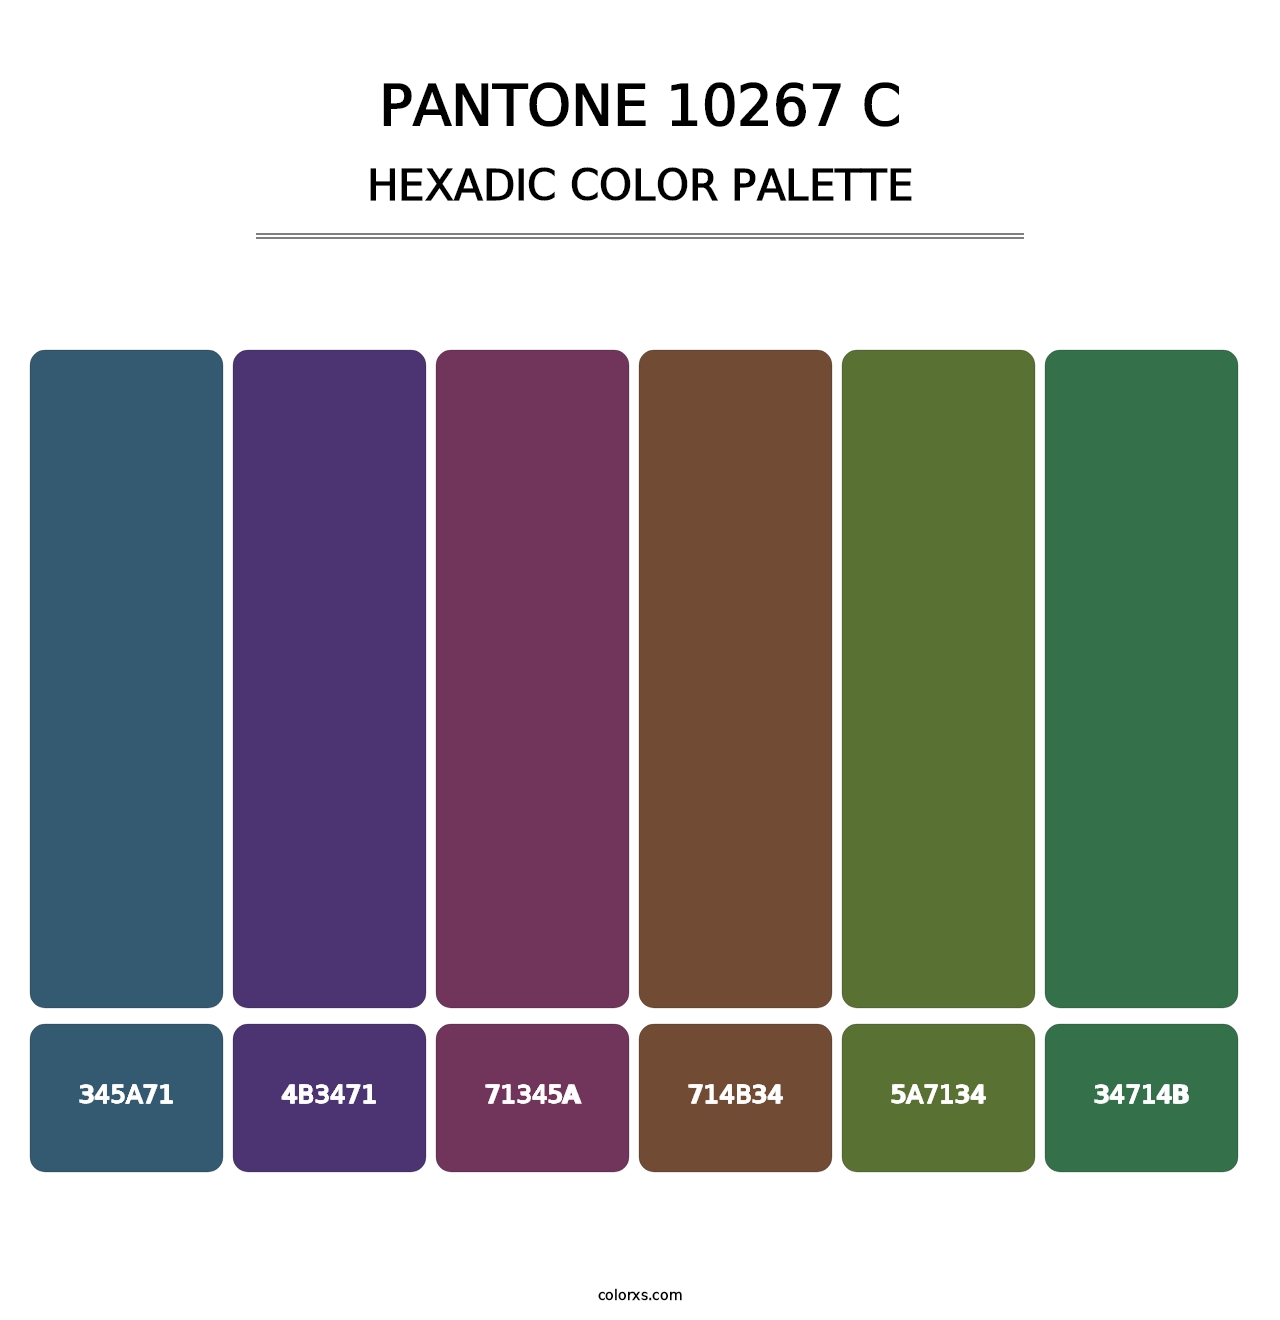 PANTONE 10267 C - Hexadic Color Palette